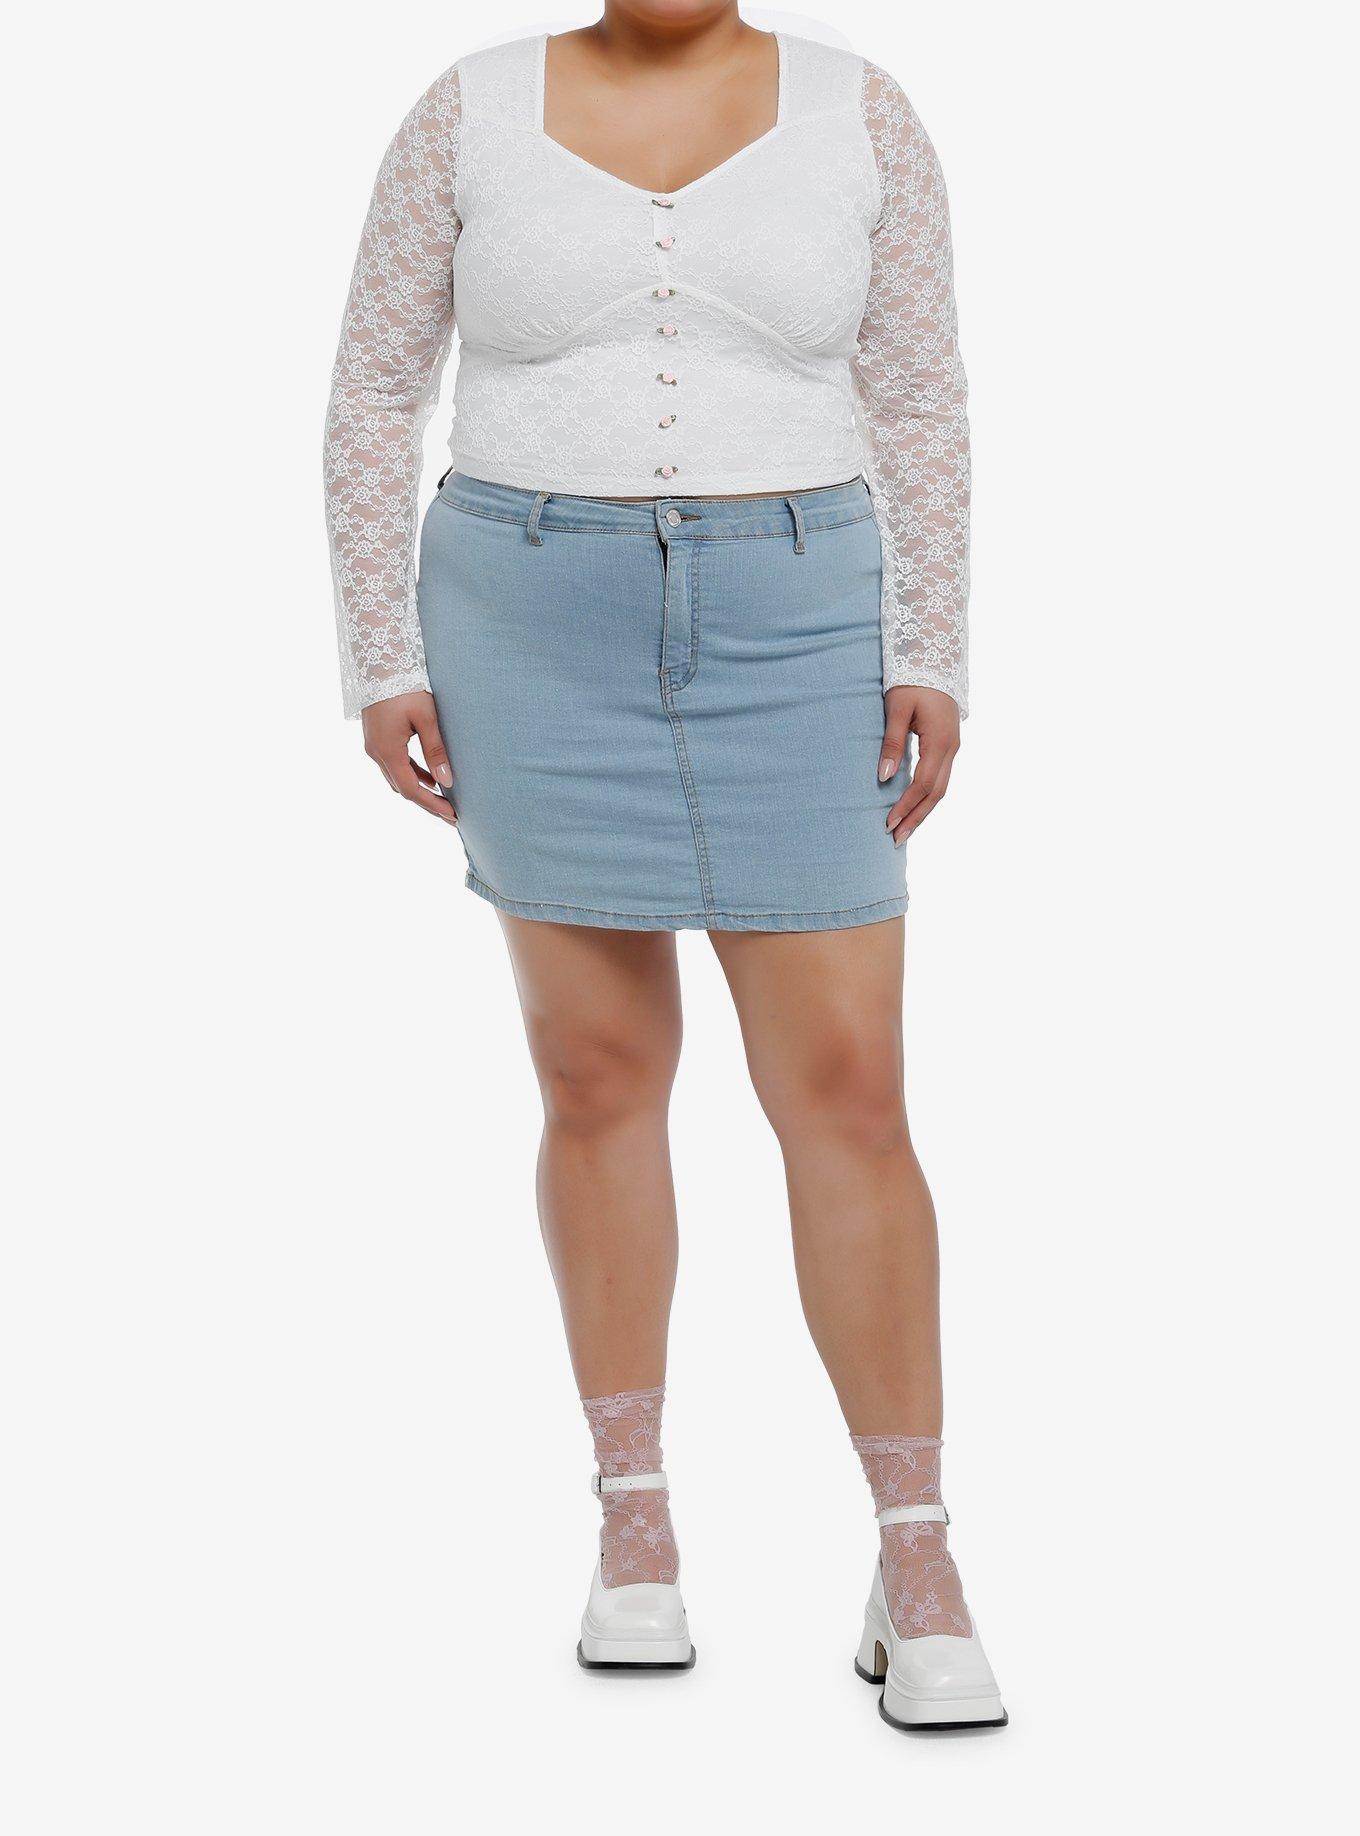 Daisy Street White Lace Rosette Girls Long-Sleeve Top Plus Size, PINK, alternate